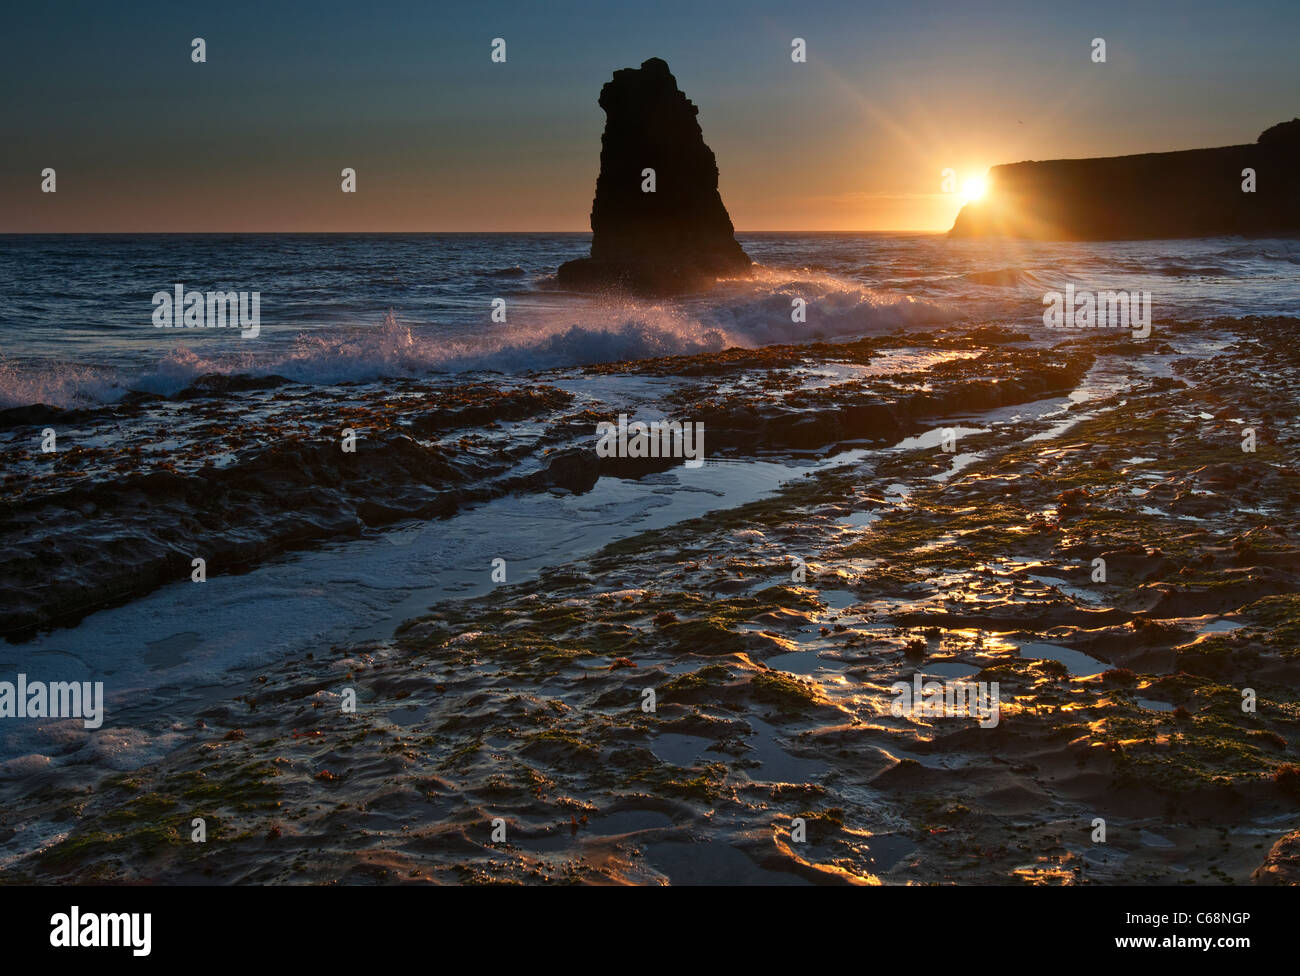 Dramatic view of a sea stack in Davenport Beach, Santa Cruz. Stock Photo